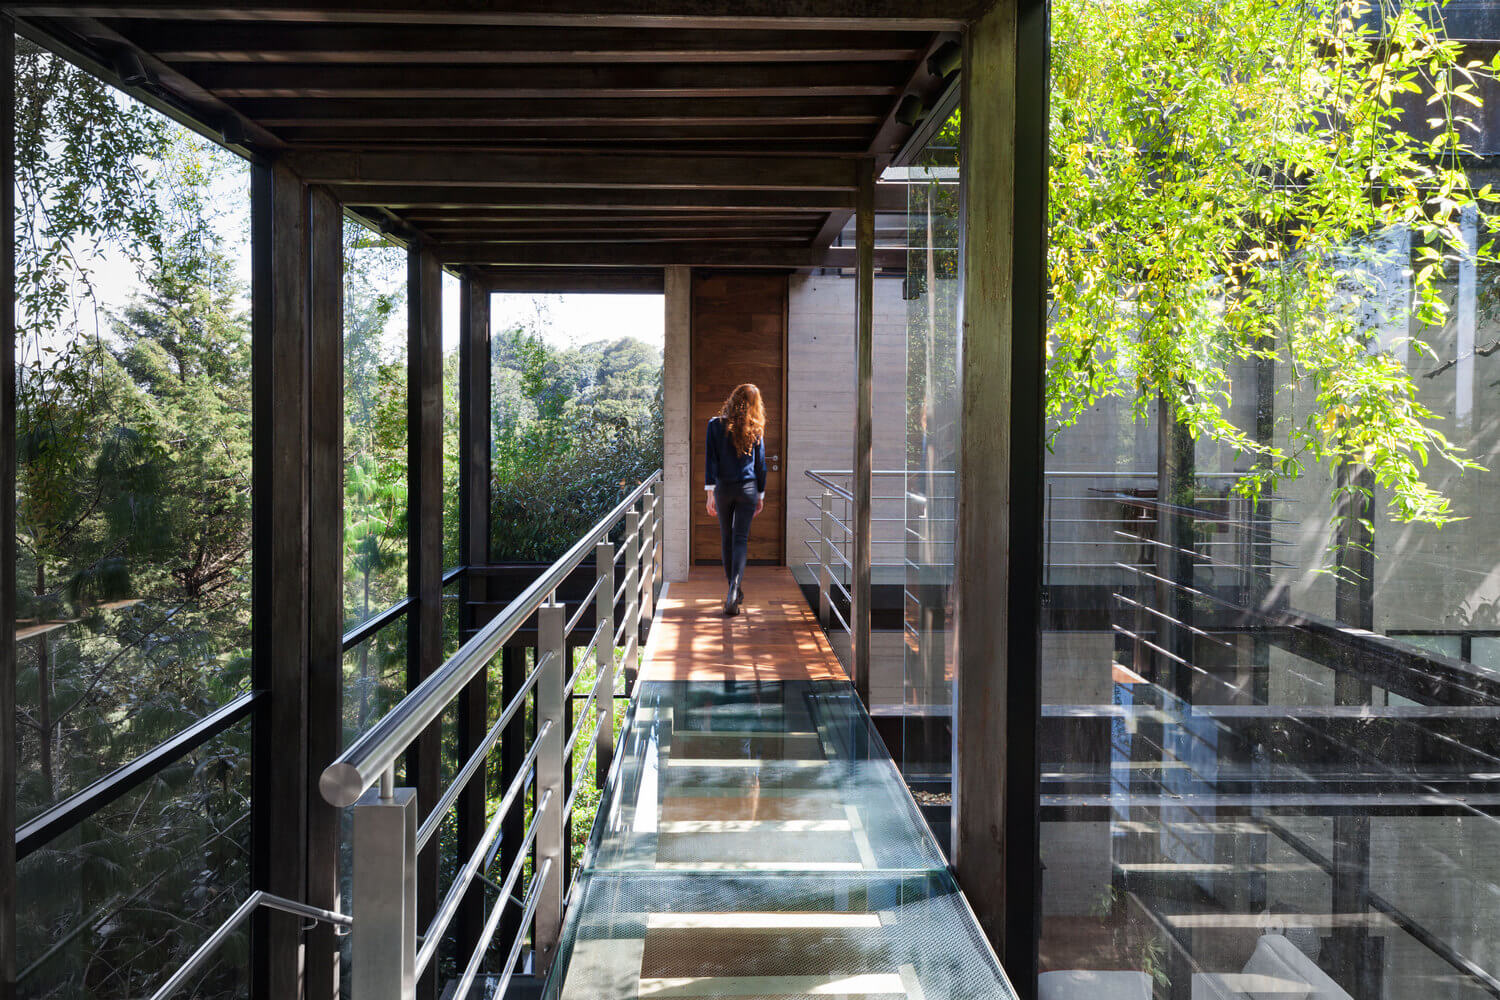 Casa no bosque na Cidade do México por Grupoarquitectura 009 Corredor + Piso de Vidro + Escada + Aço